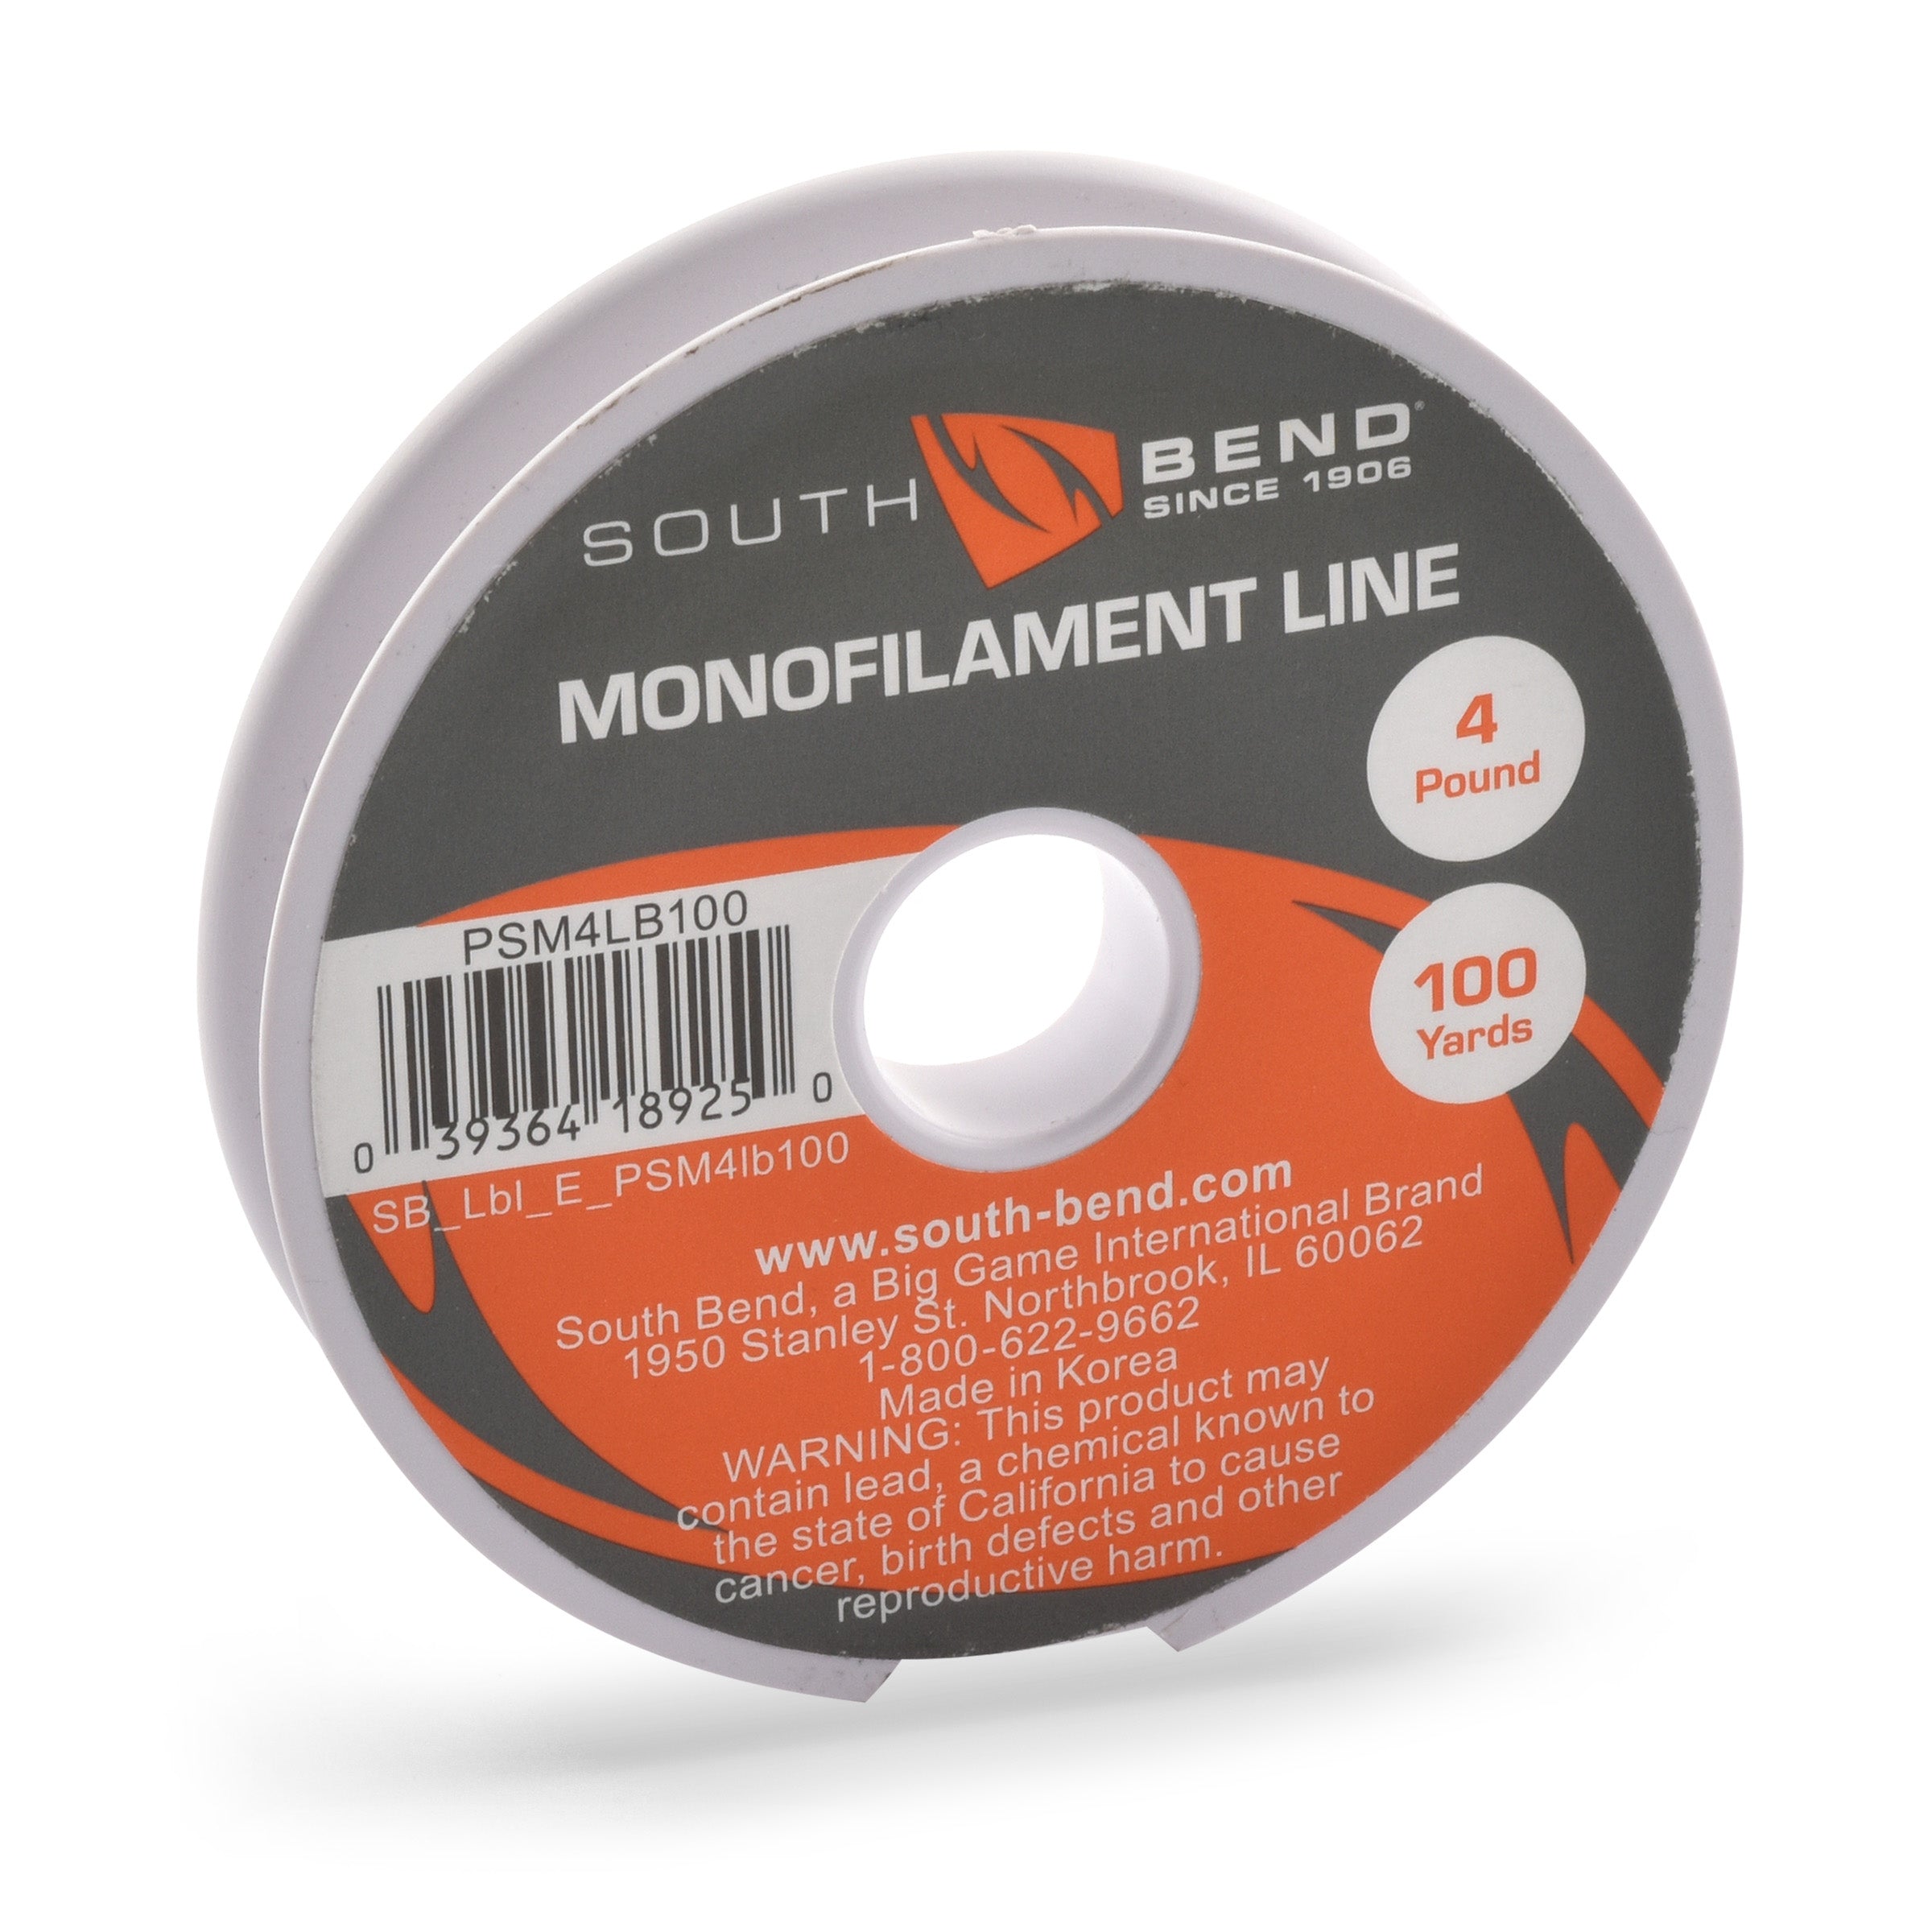 South Bend monofilament fishing line 4 lb test